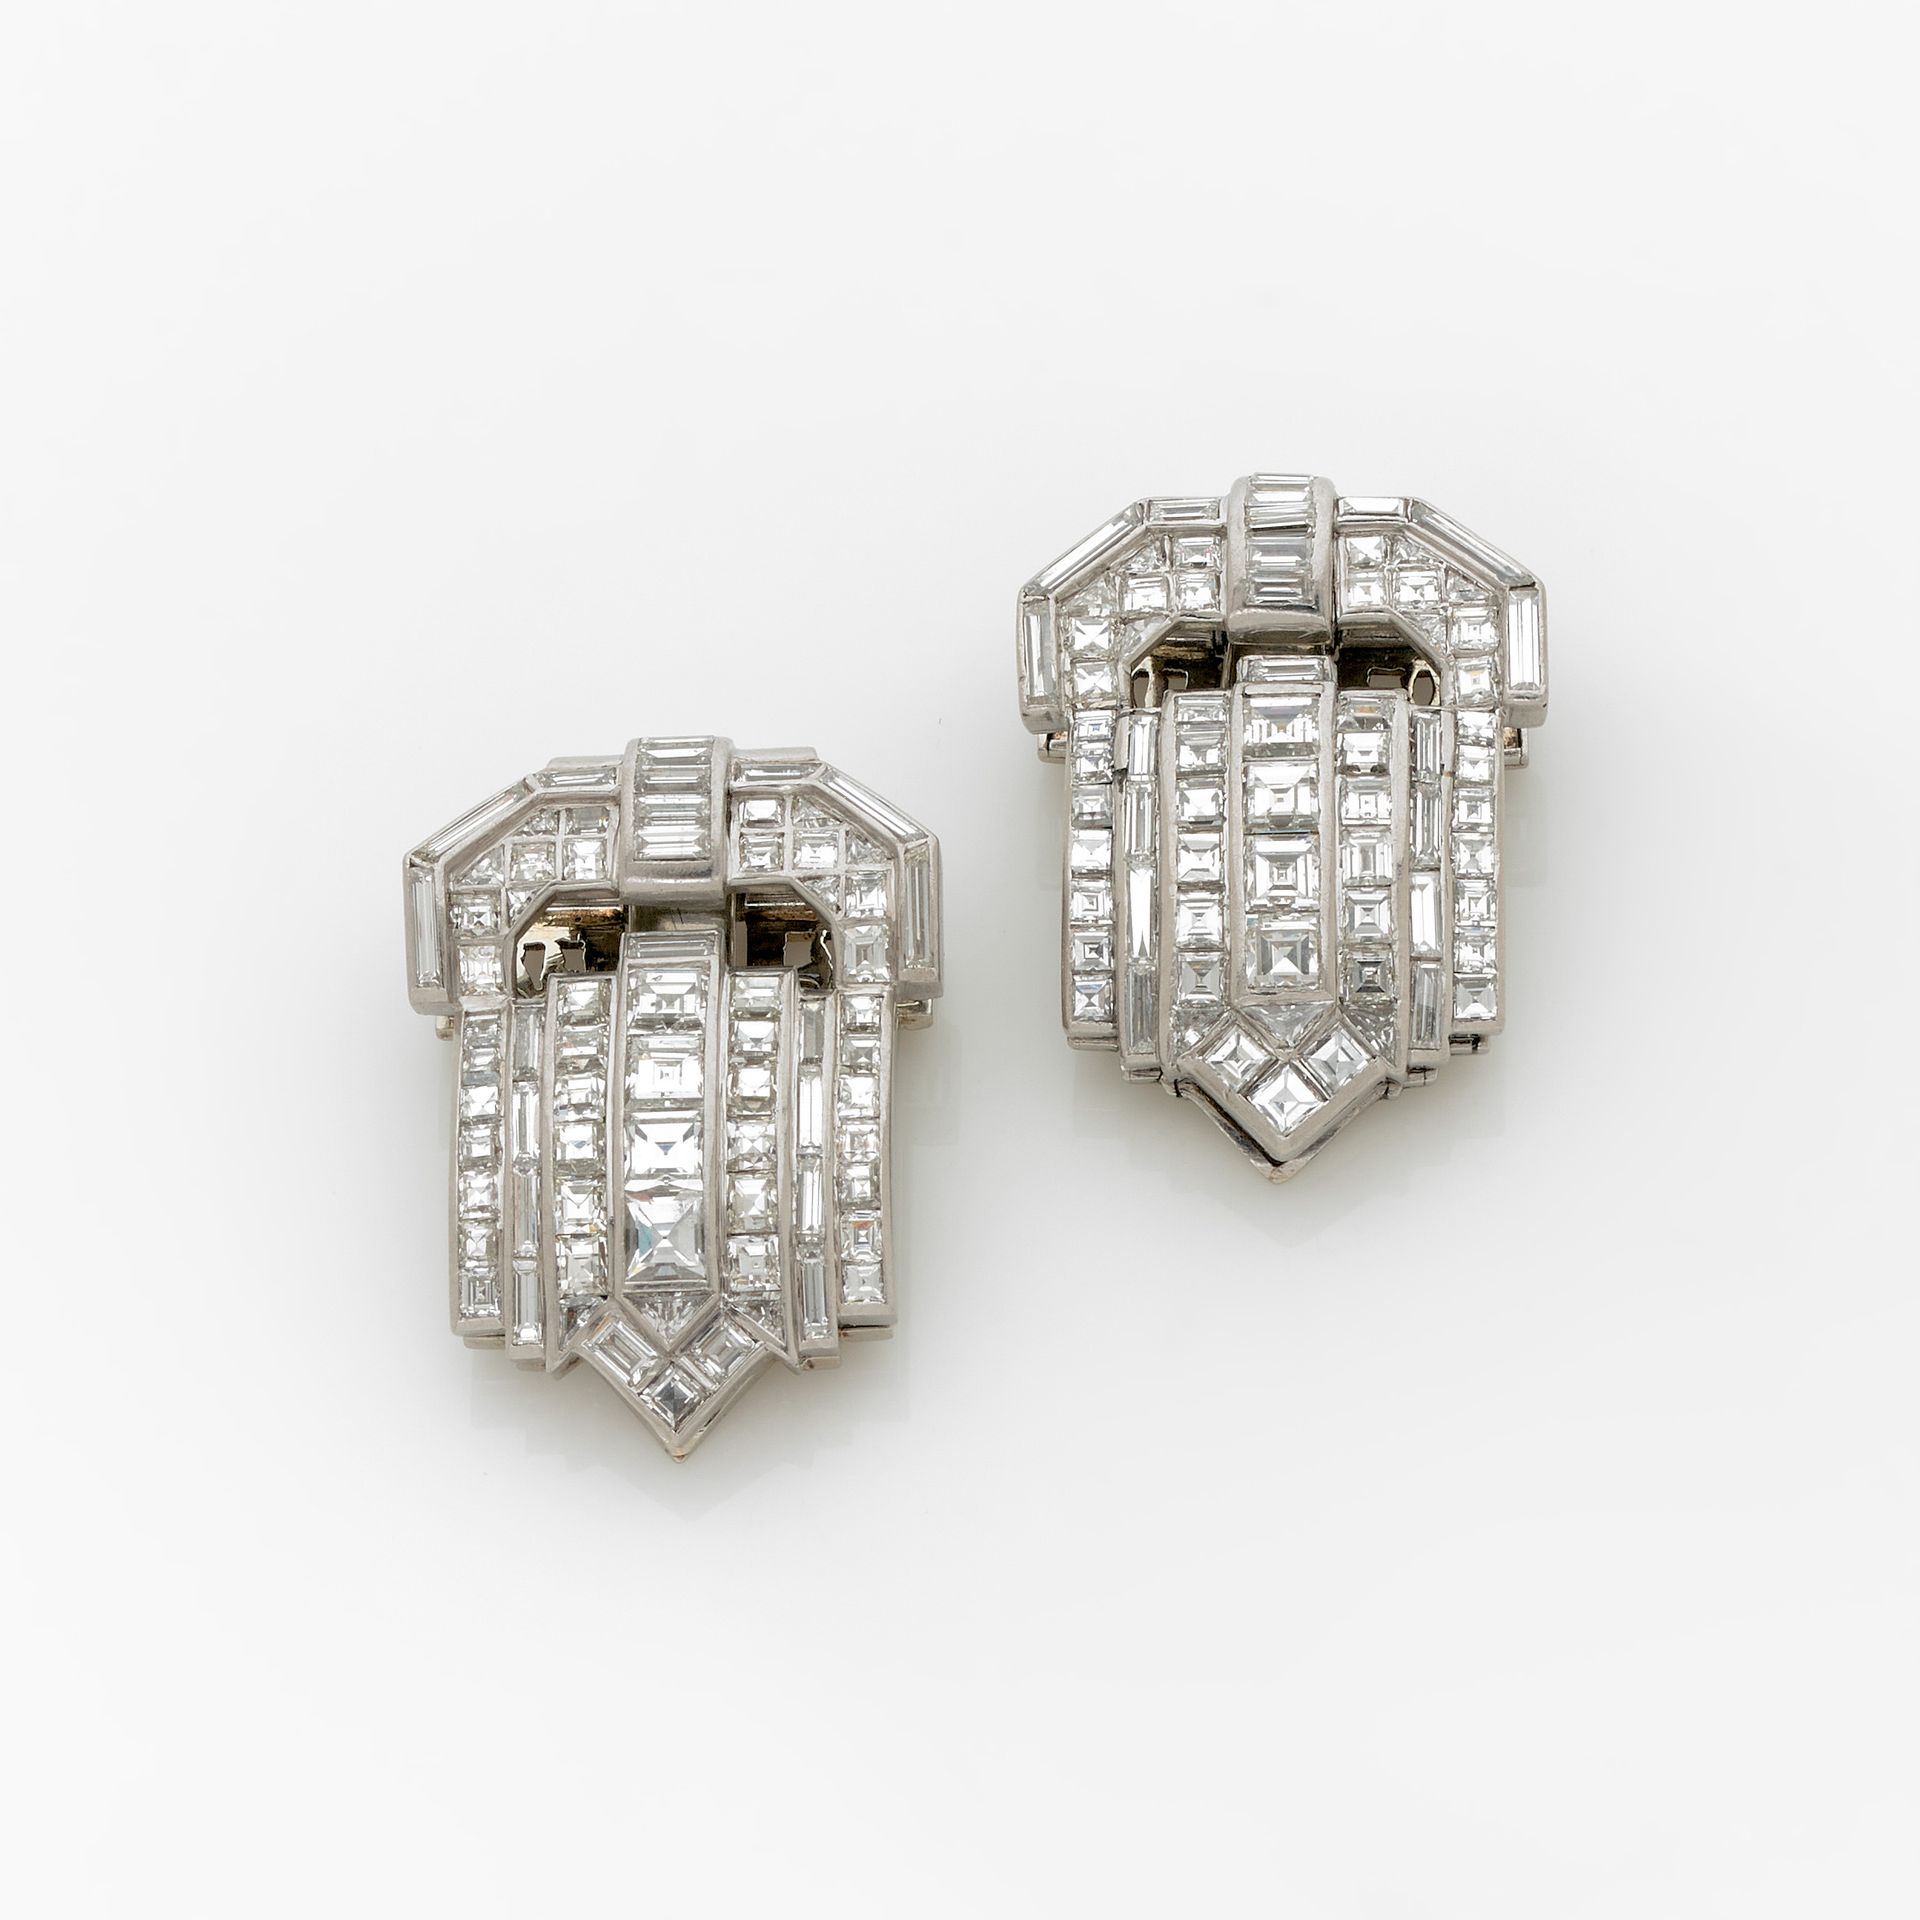 Null 布赫隆(BOUCHERON)

一对装饰艺术风格的领带夹

铂金材质，带风格化的几何形扣，装饰有圆形和长方形钻石。

约1925年。

一个夹子上有签&hellip;